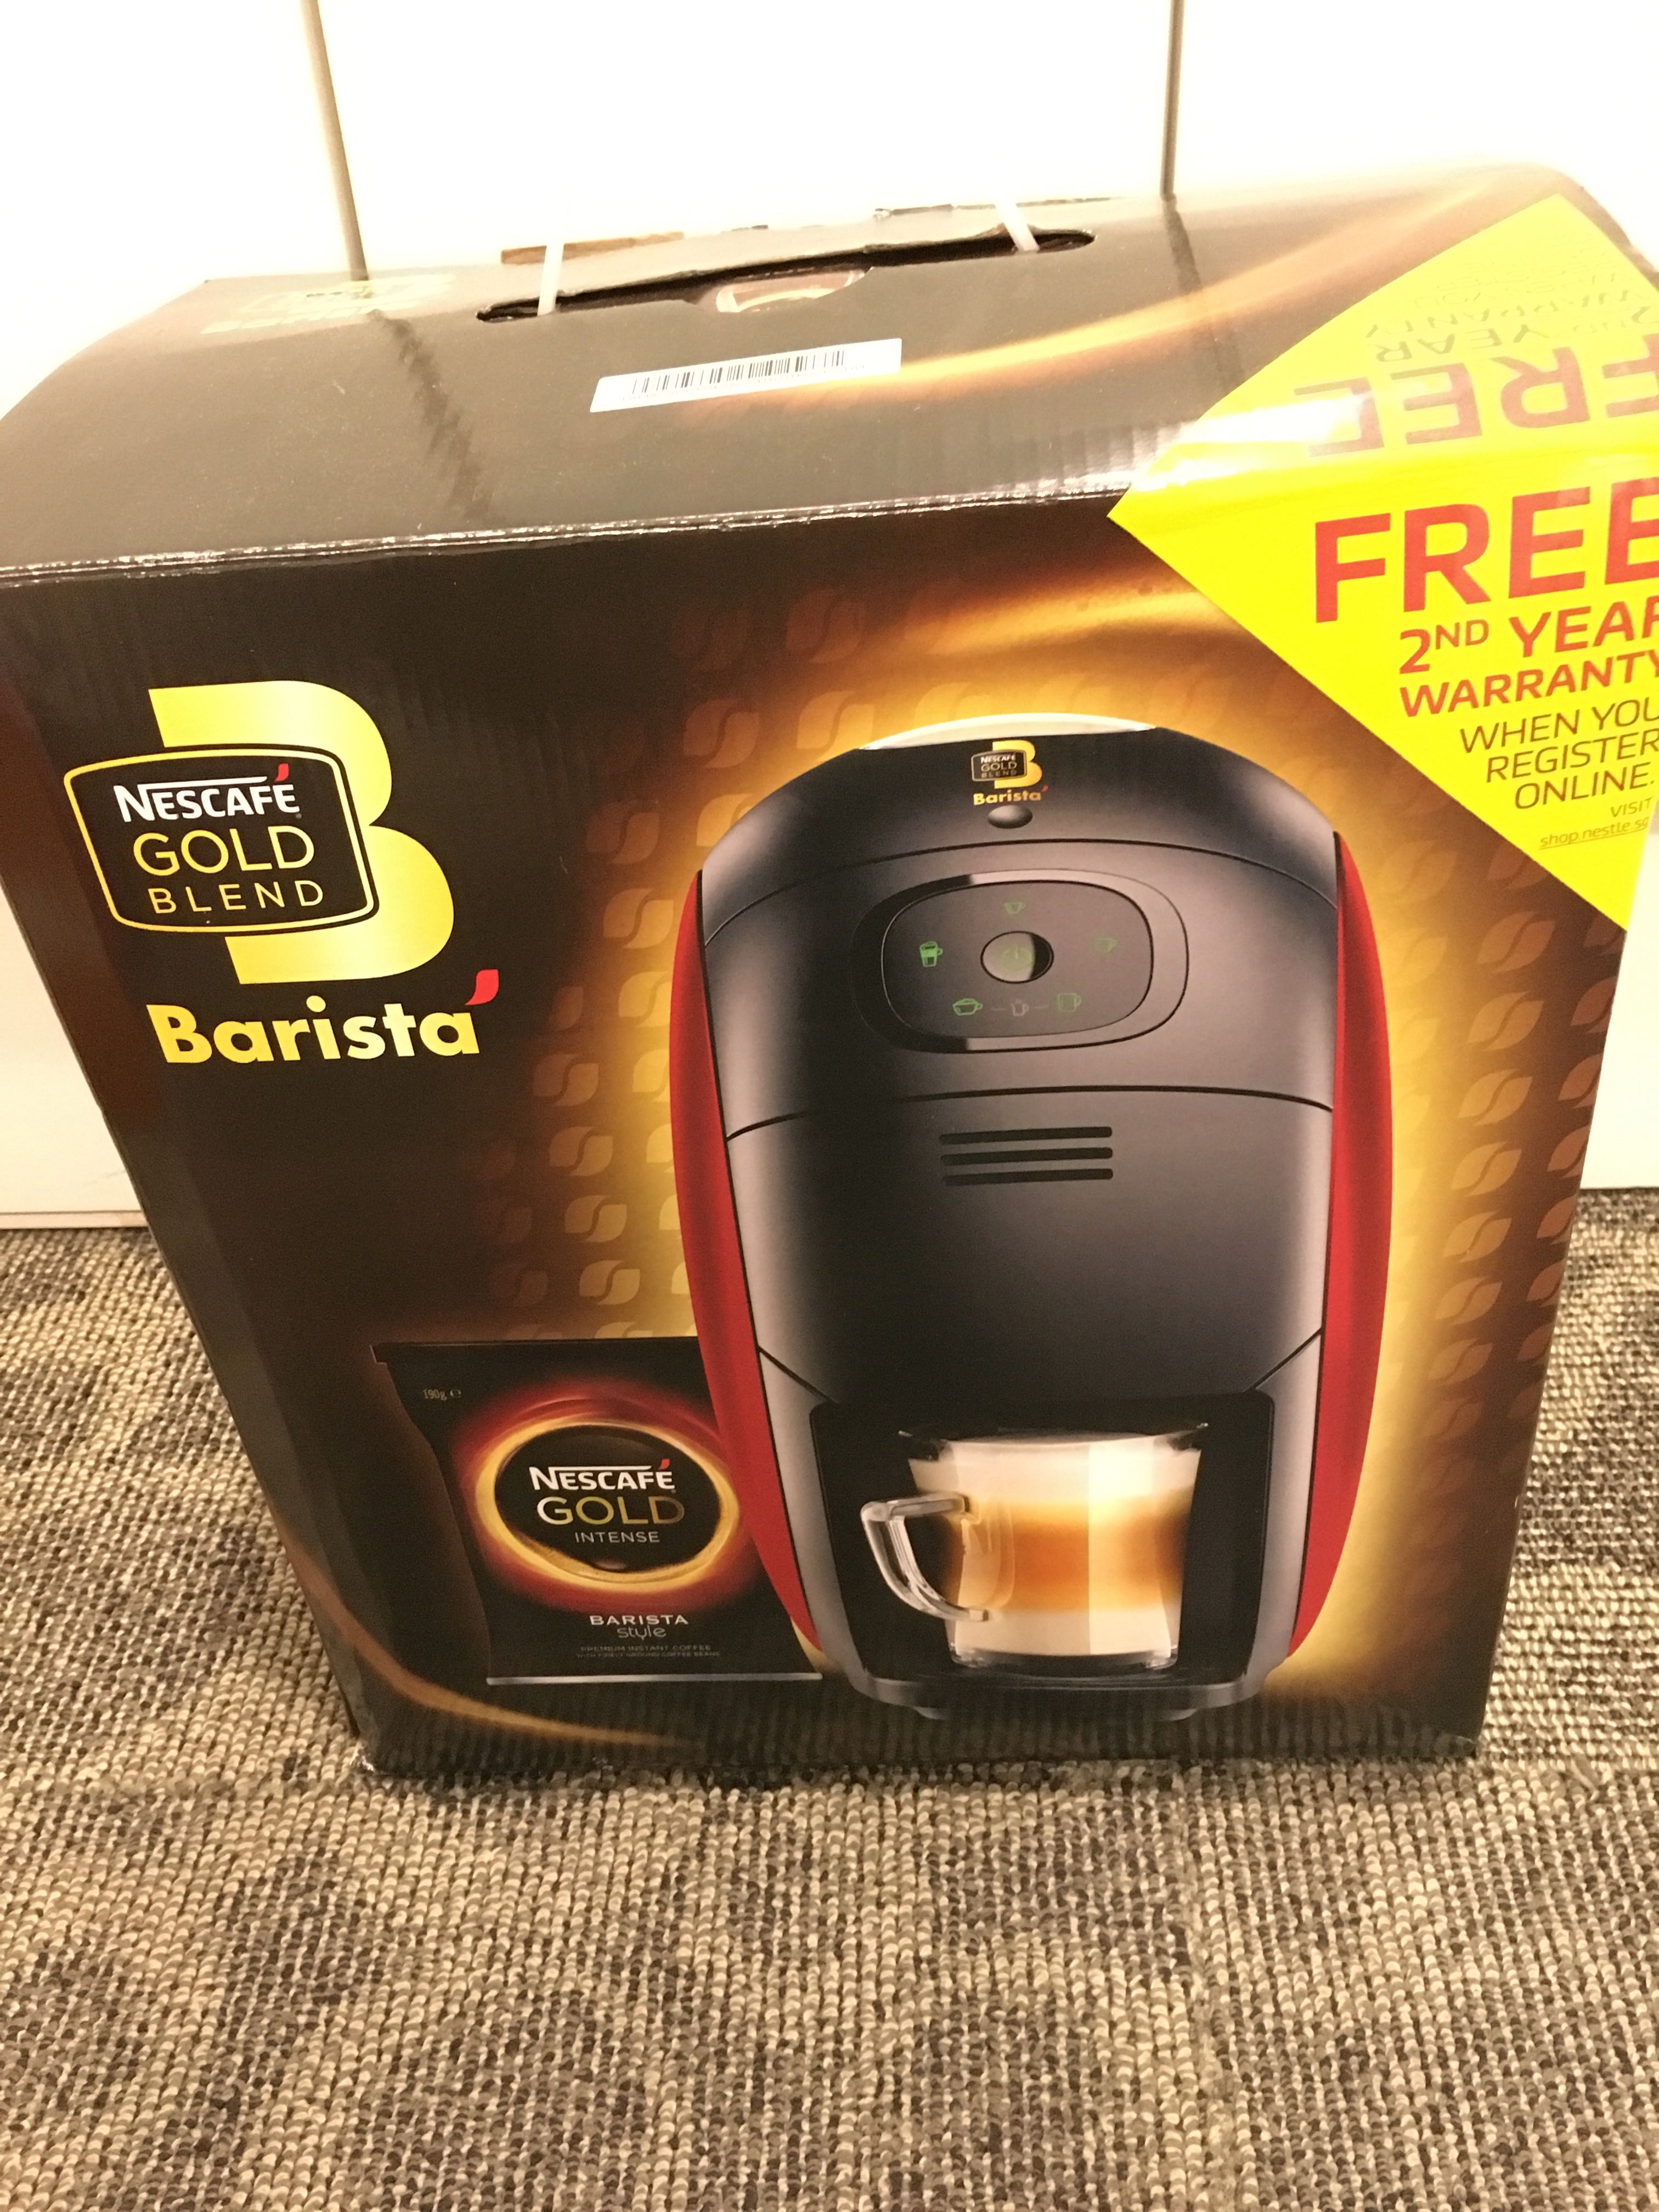 Nescafe Gold Blend Barista Coffee Machine Home Appliances Kitchenware On Carousell